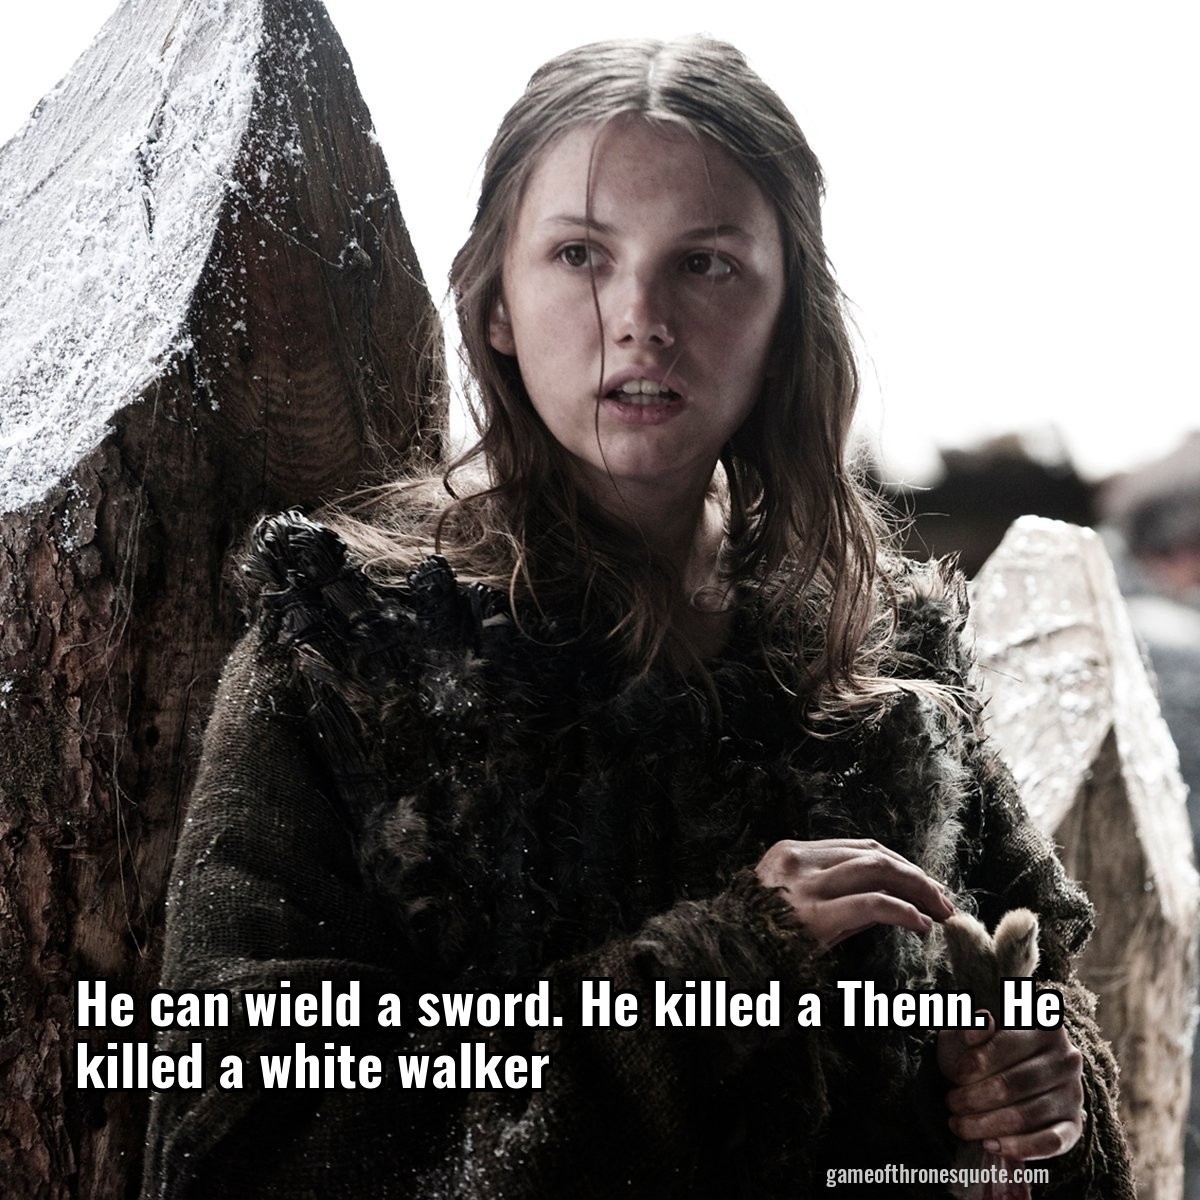 He can wield a sword. He killed a Thenn. He killed a white walker